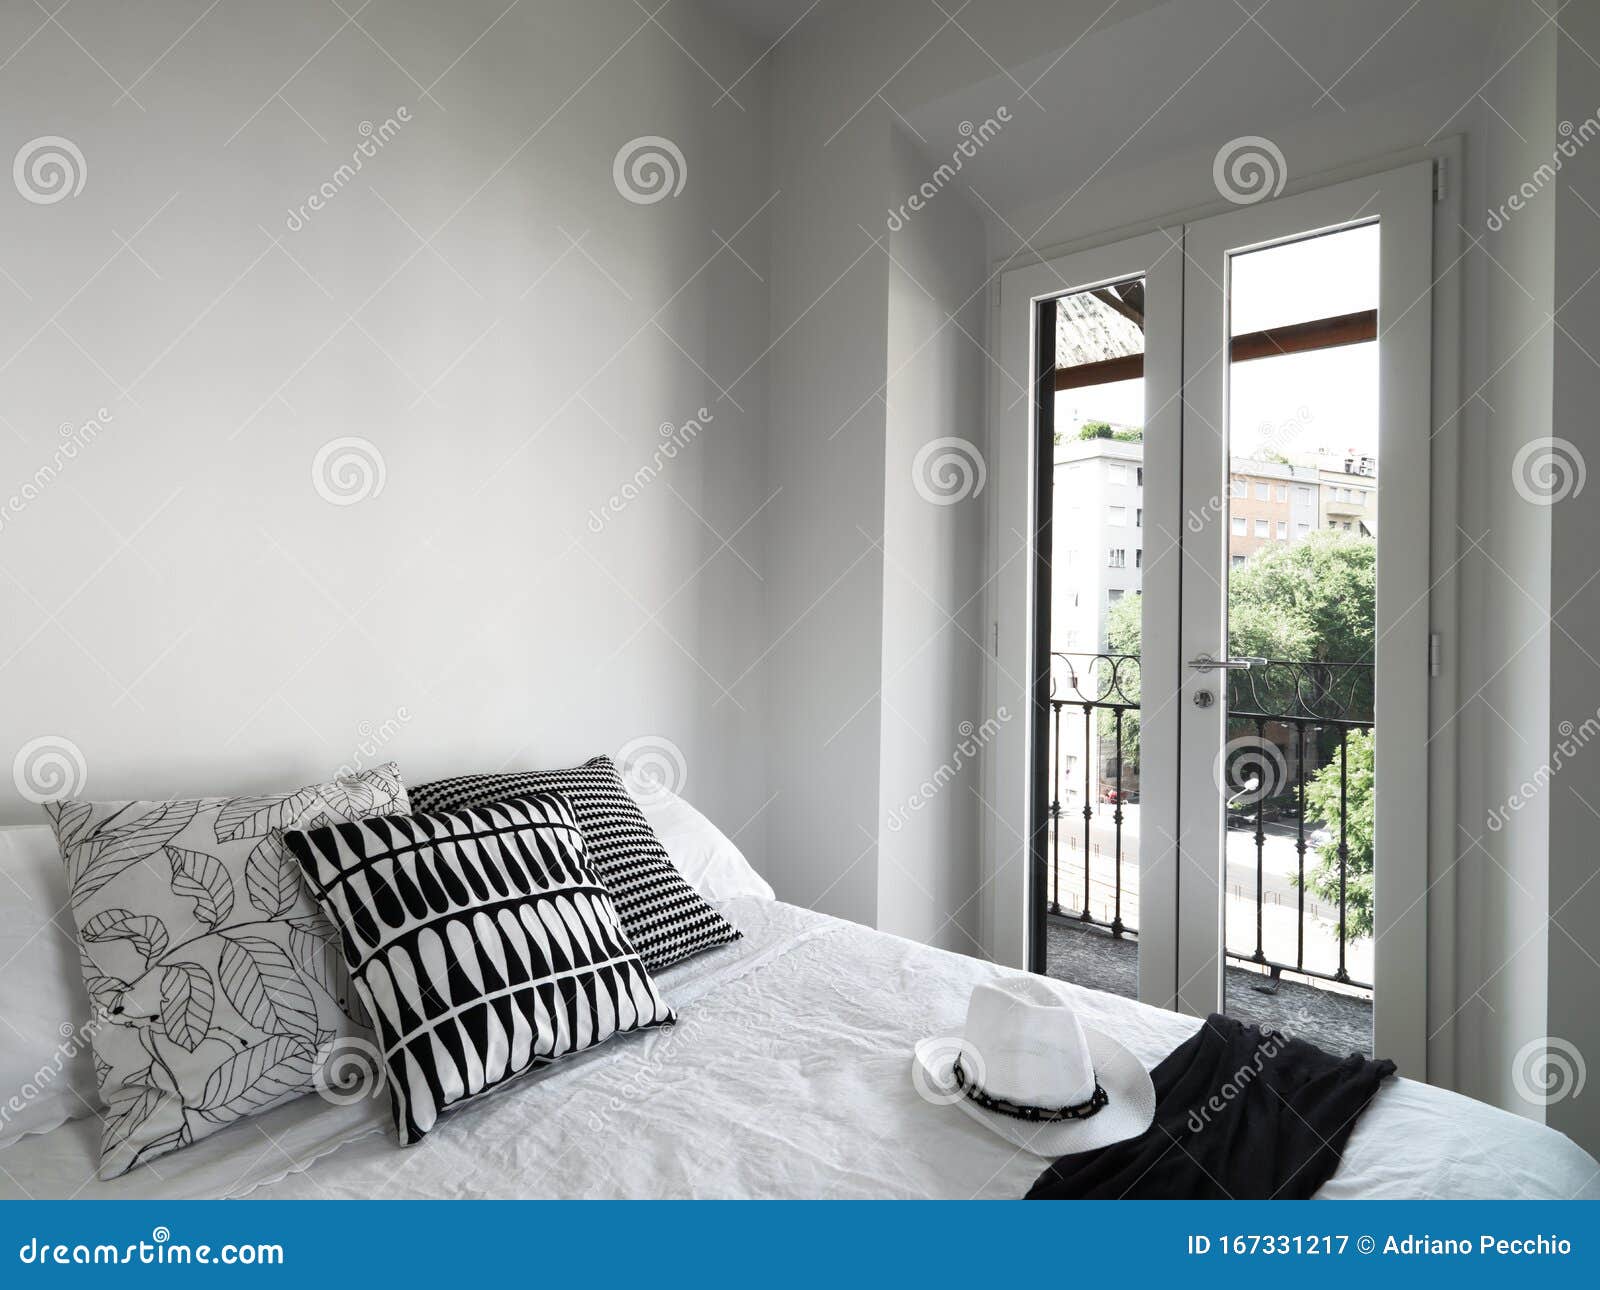 interiors shots of a modern bedroom